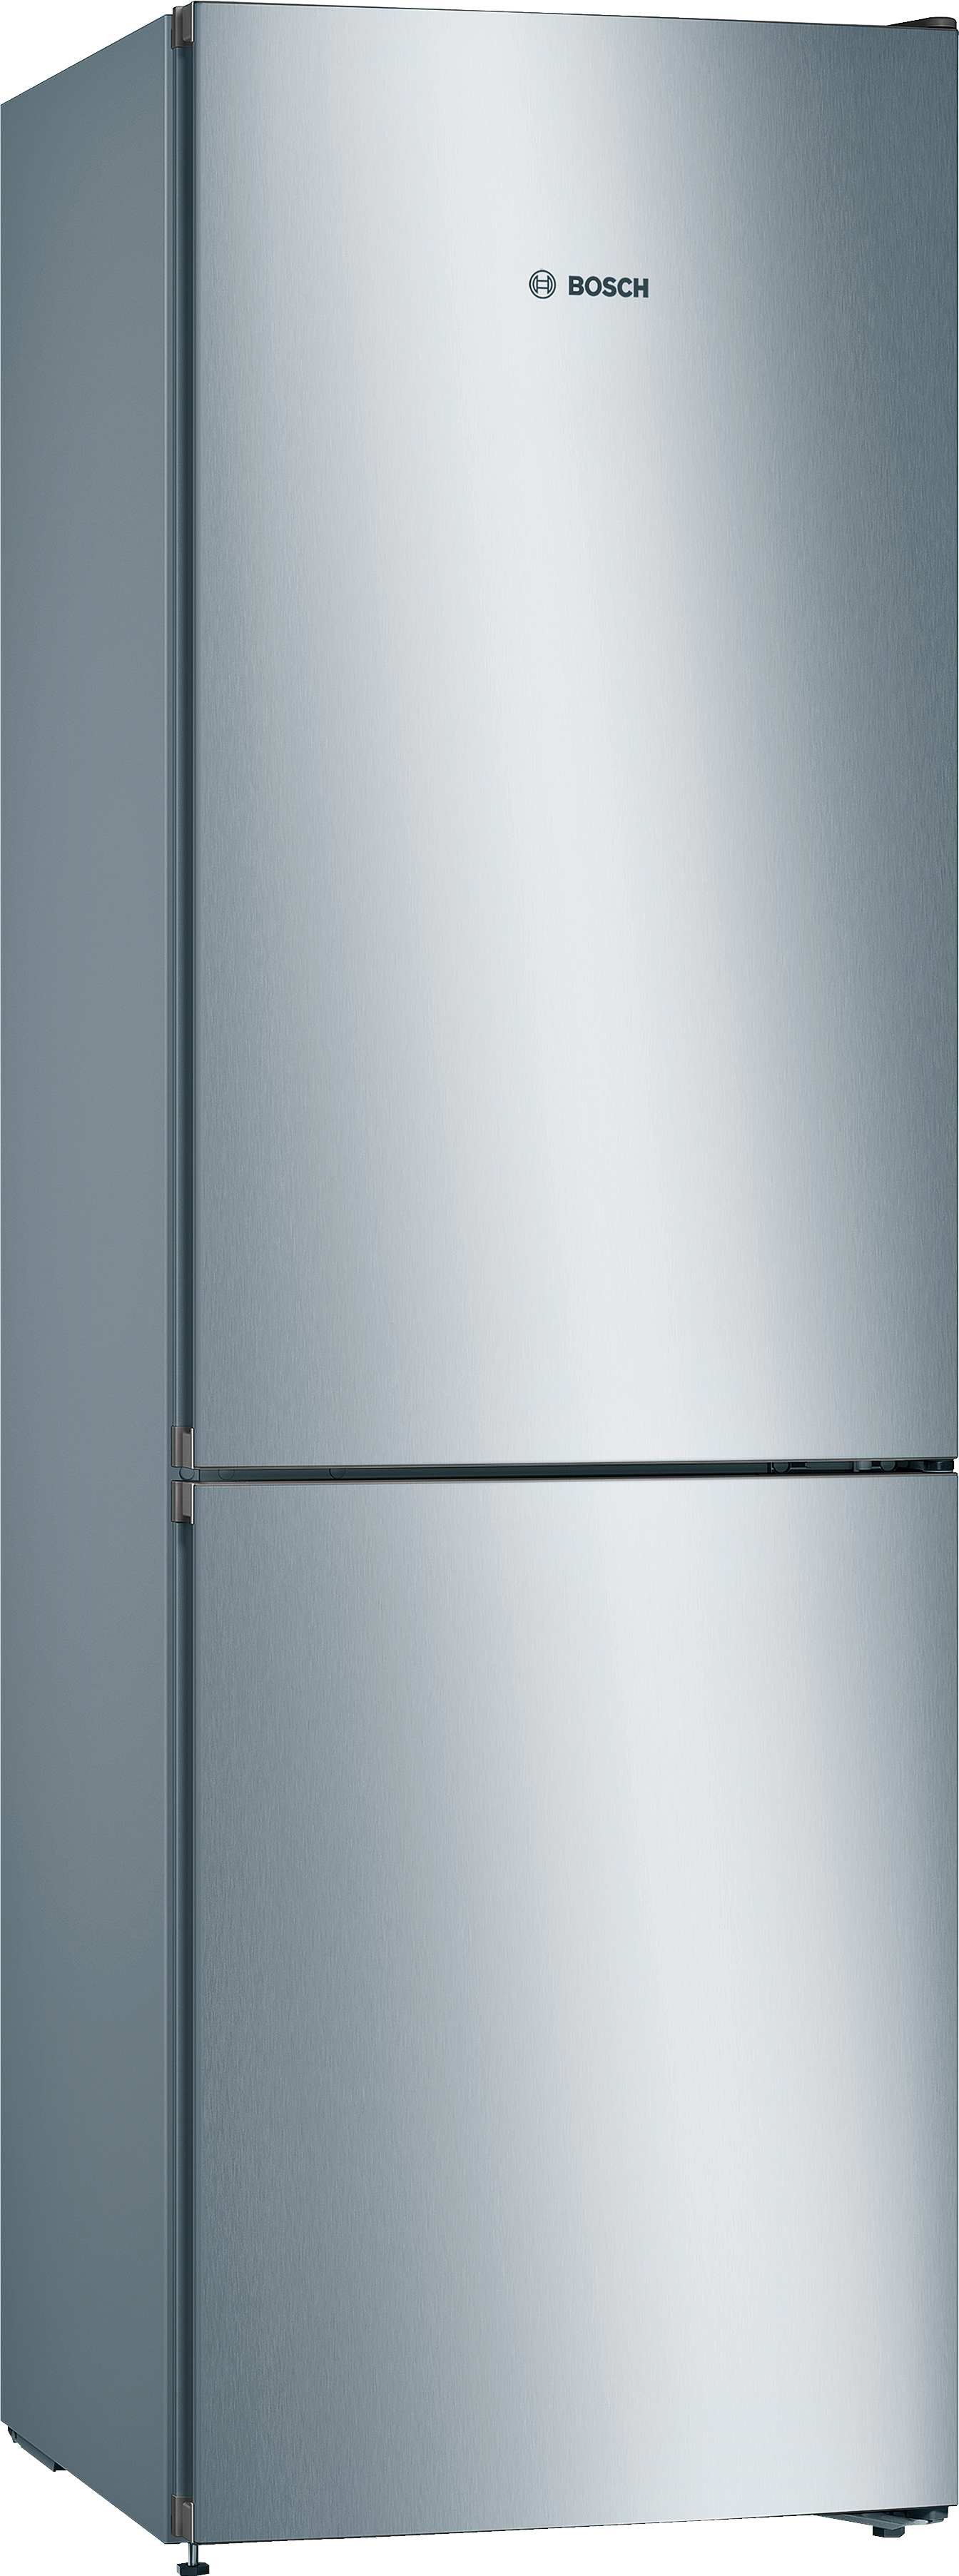 Характеристики холодильник Bosch KGN36VL326